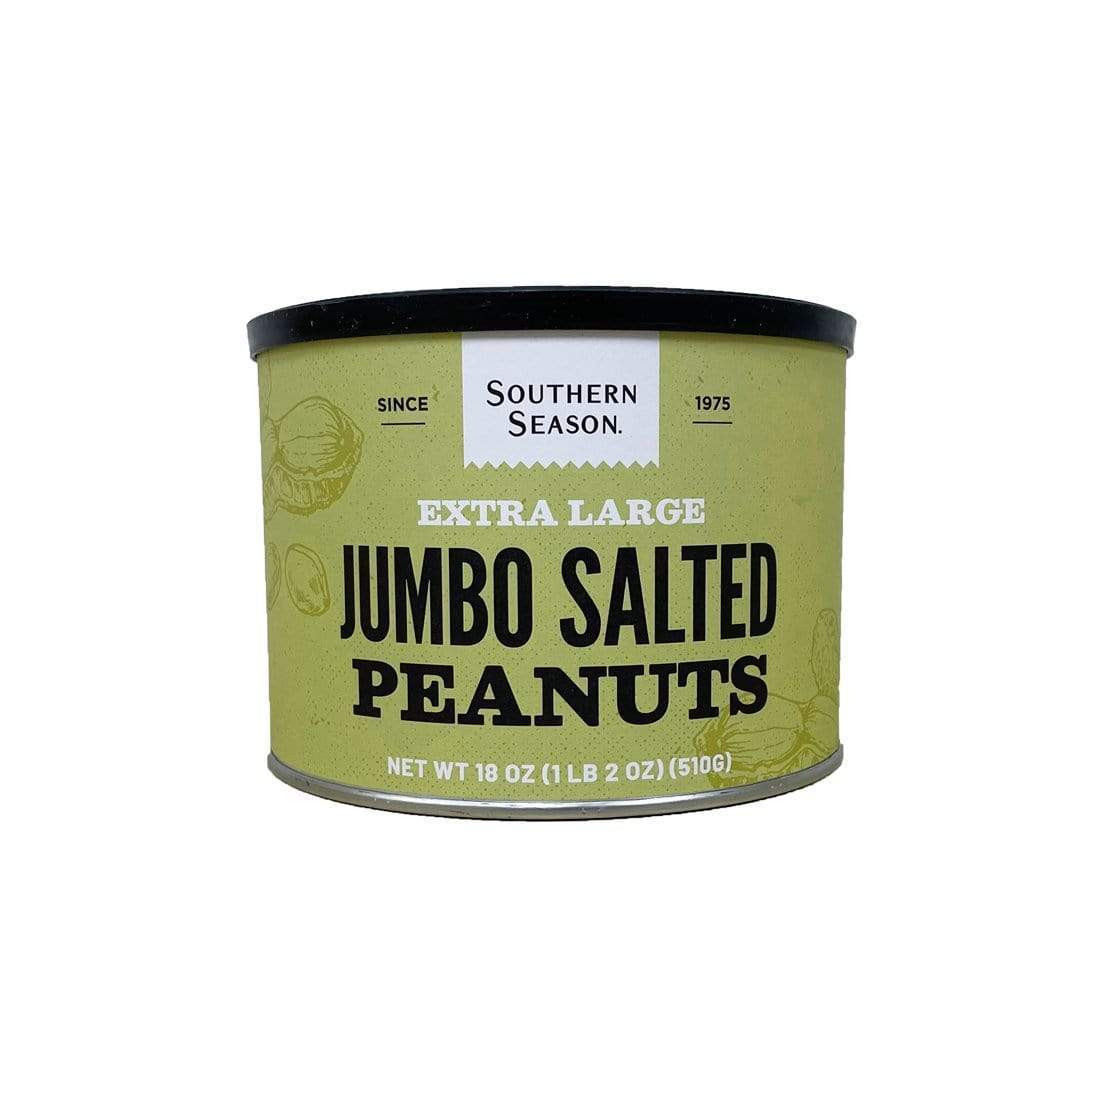 Southern Season Southern Season Jumbo Salted Peanuts 18 oz